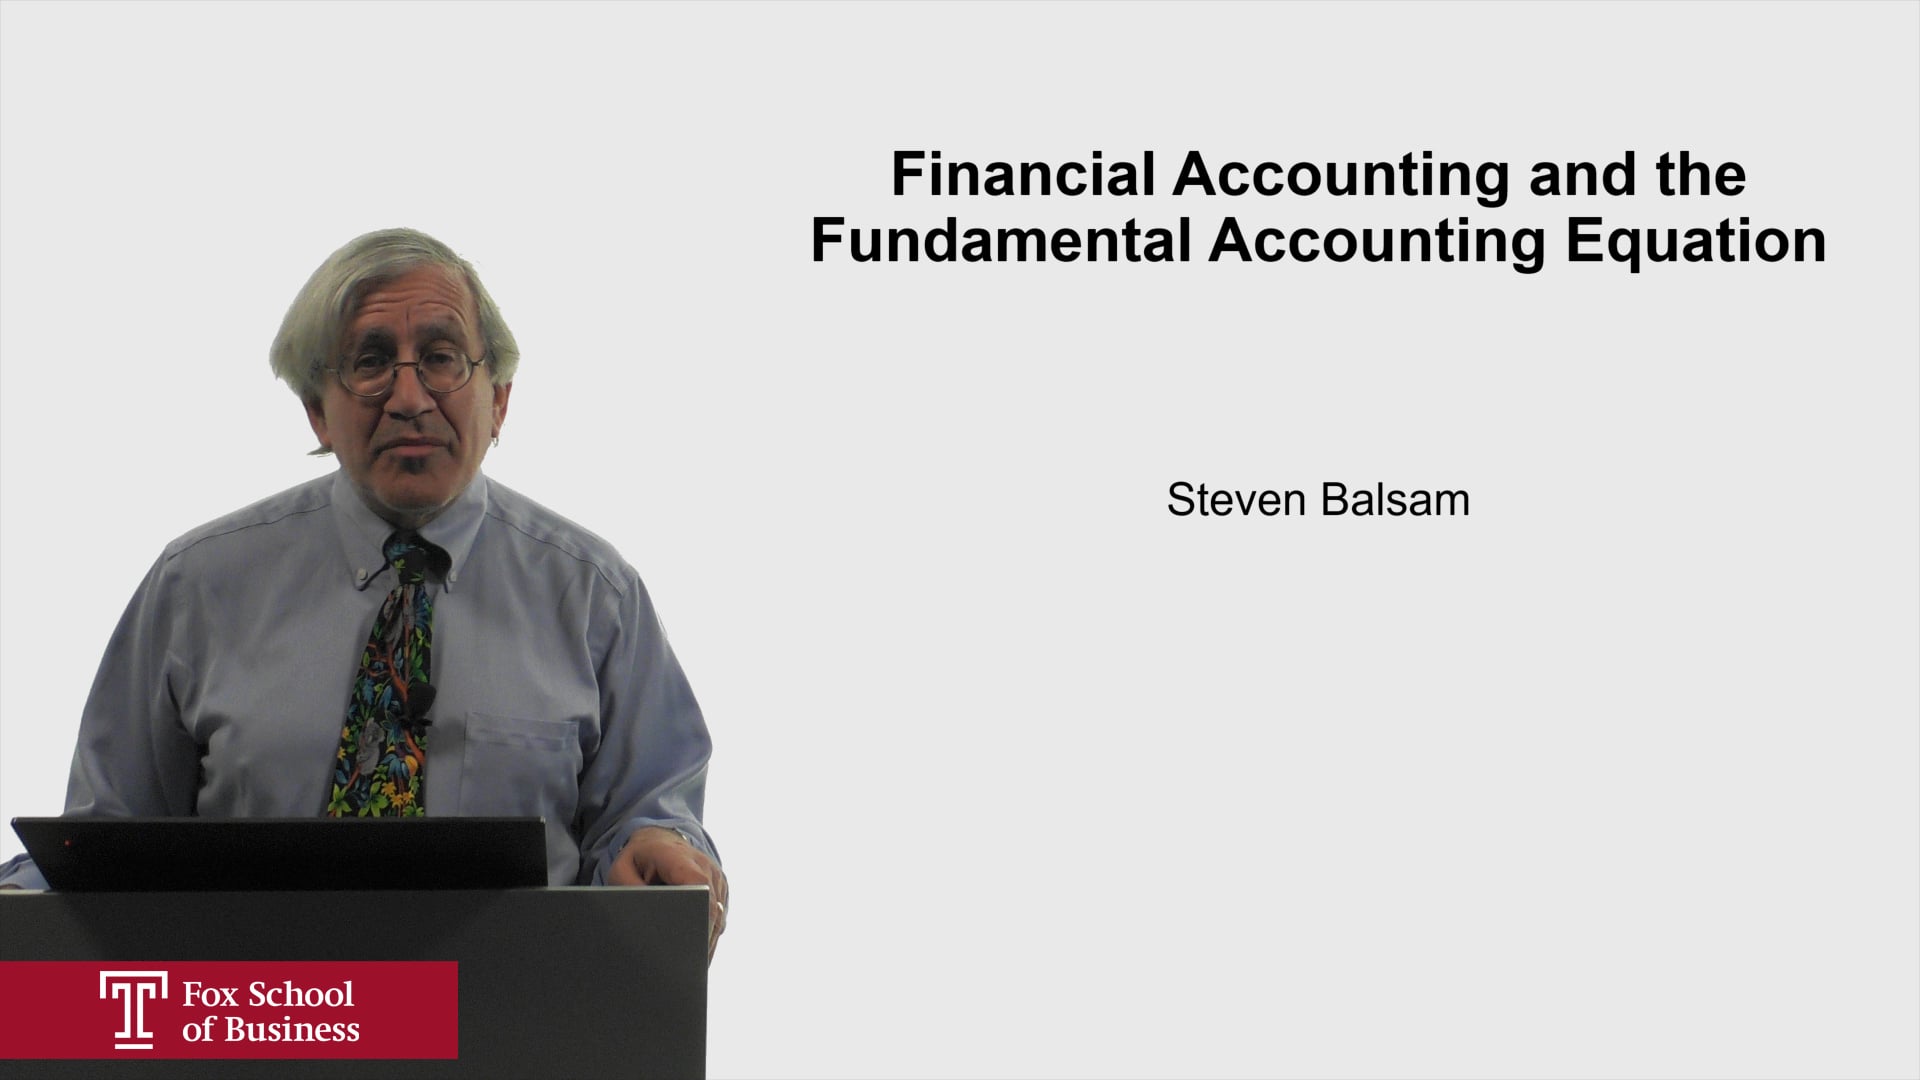 Financial Accounting and the Fundamental Accounting Equation